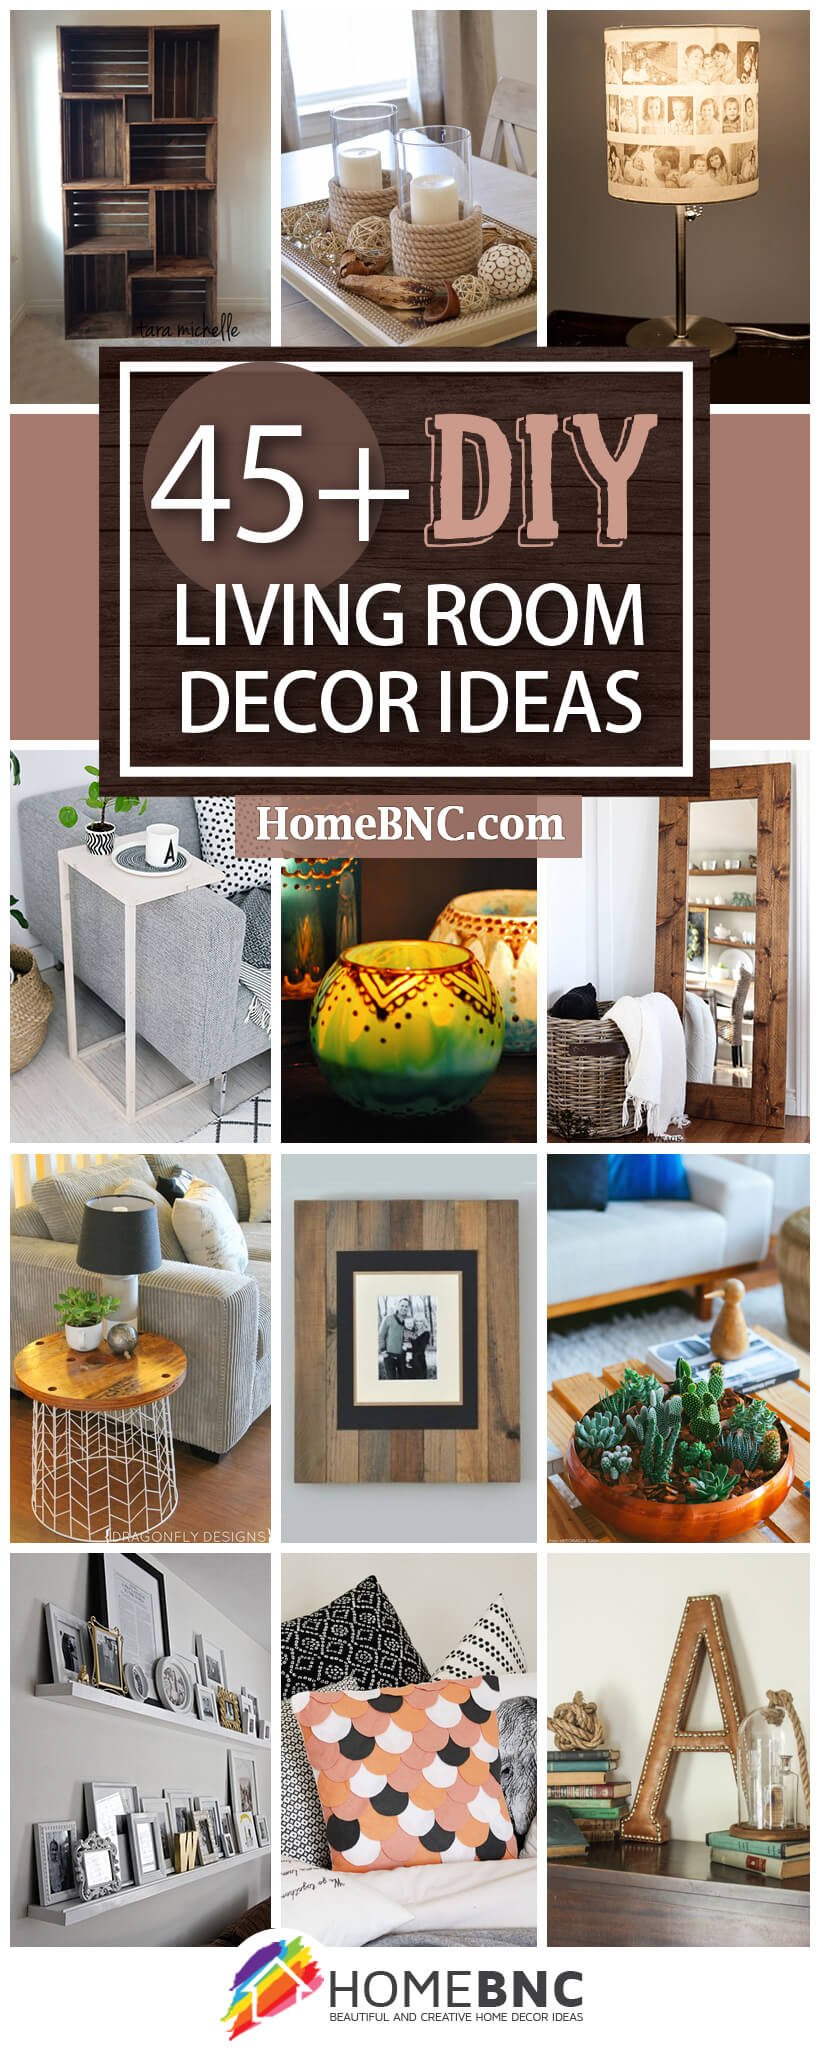 Budget Living Room Decorating Ideas 45 Best Diy Living Room Decorating Ideas and Designs for 2019